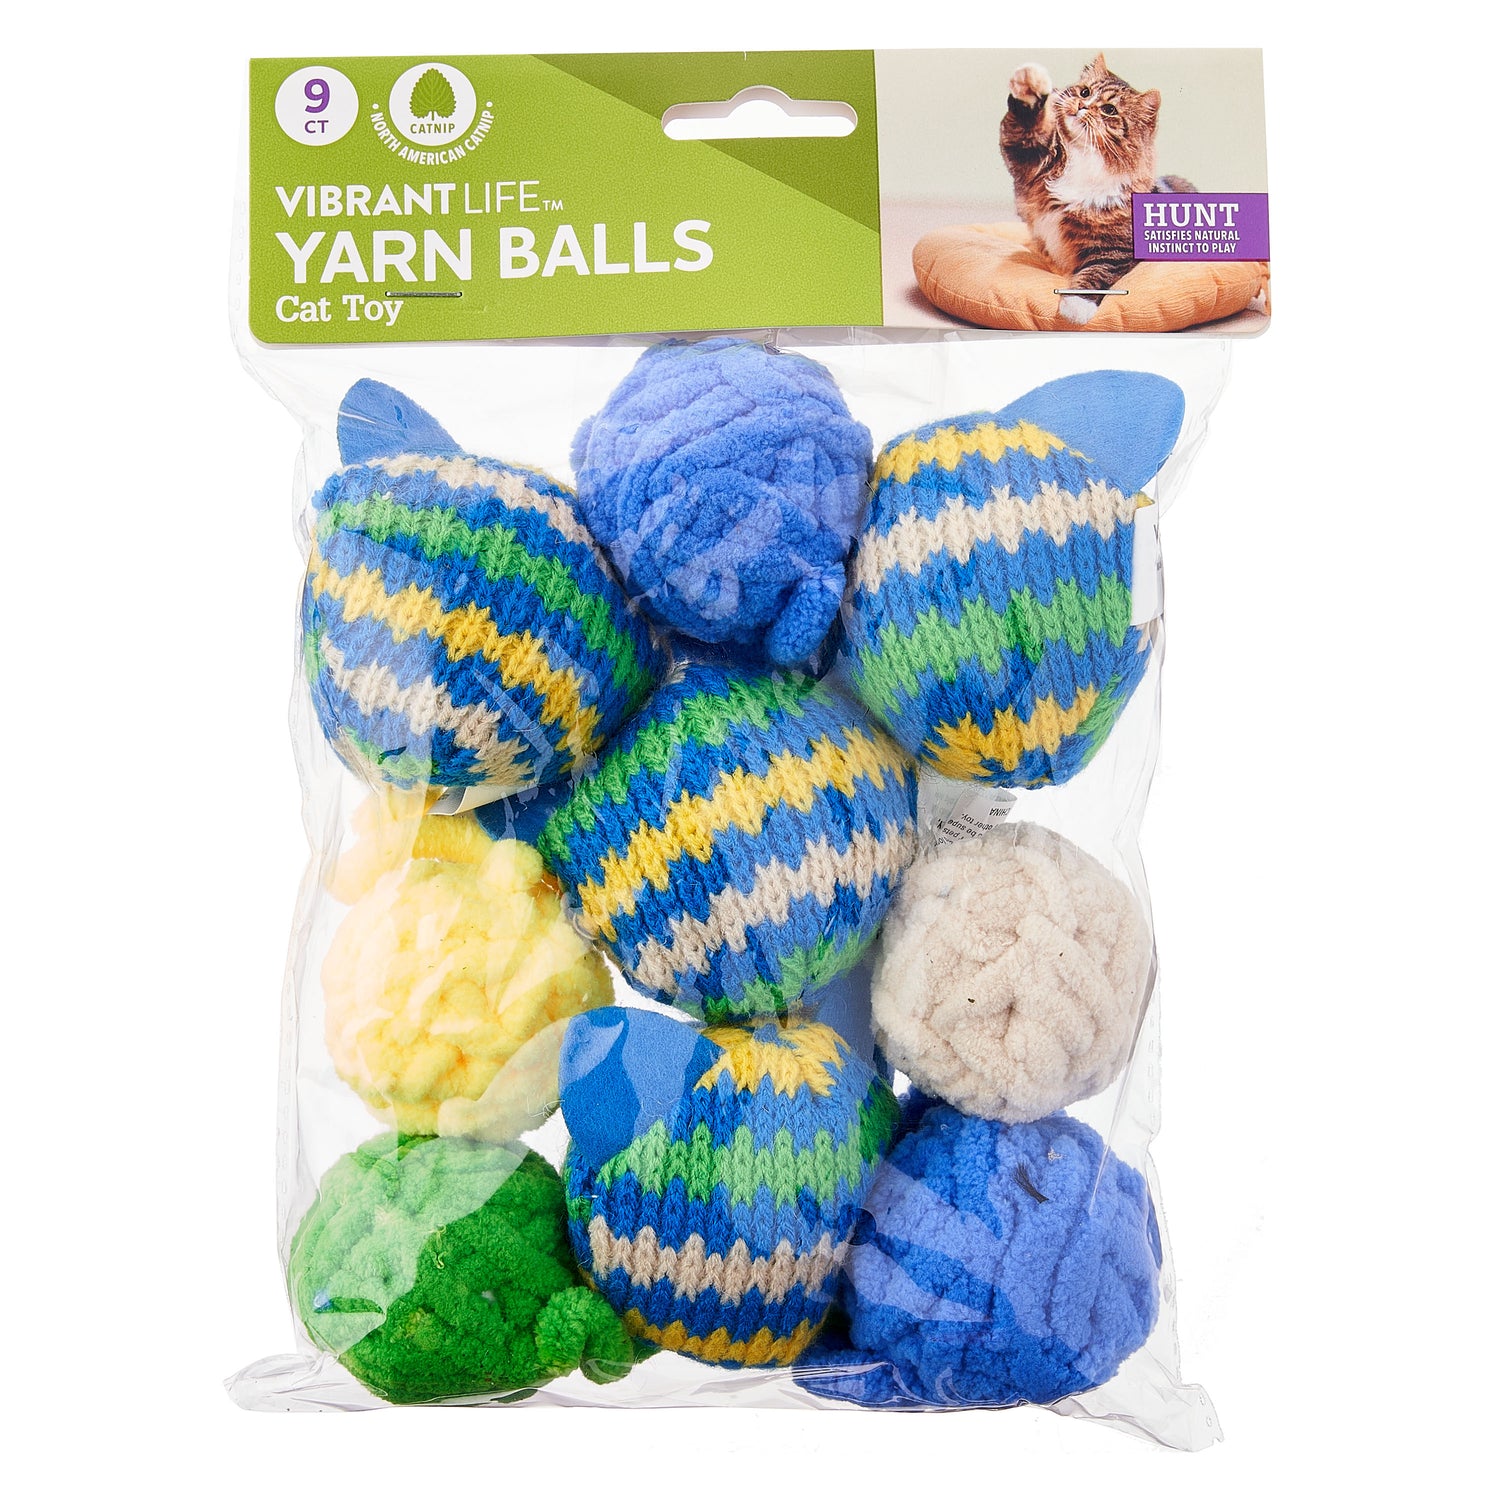 Vibrant Life Cat Toy - Catnip Yarn Balls, 9 Count with Catnip